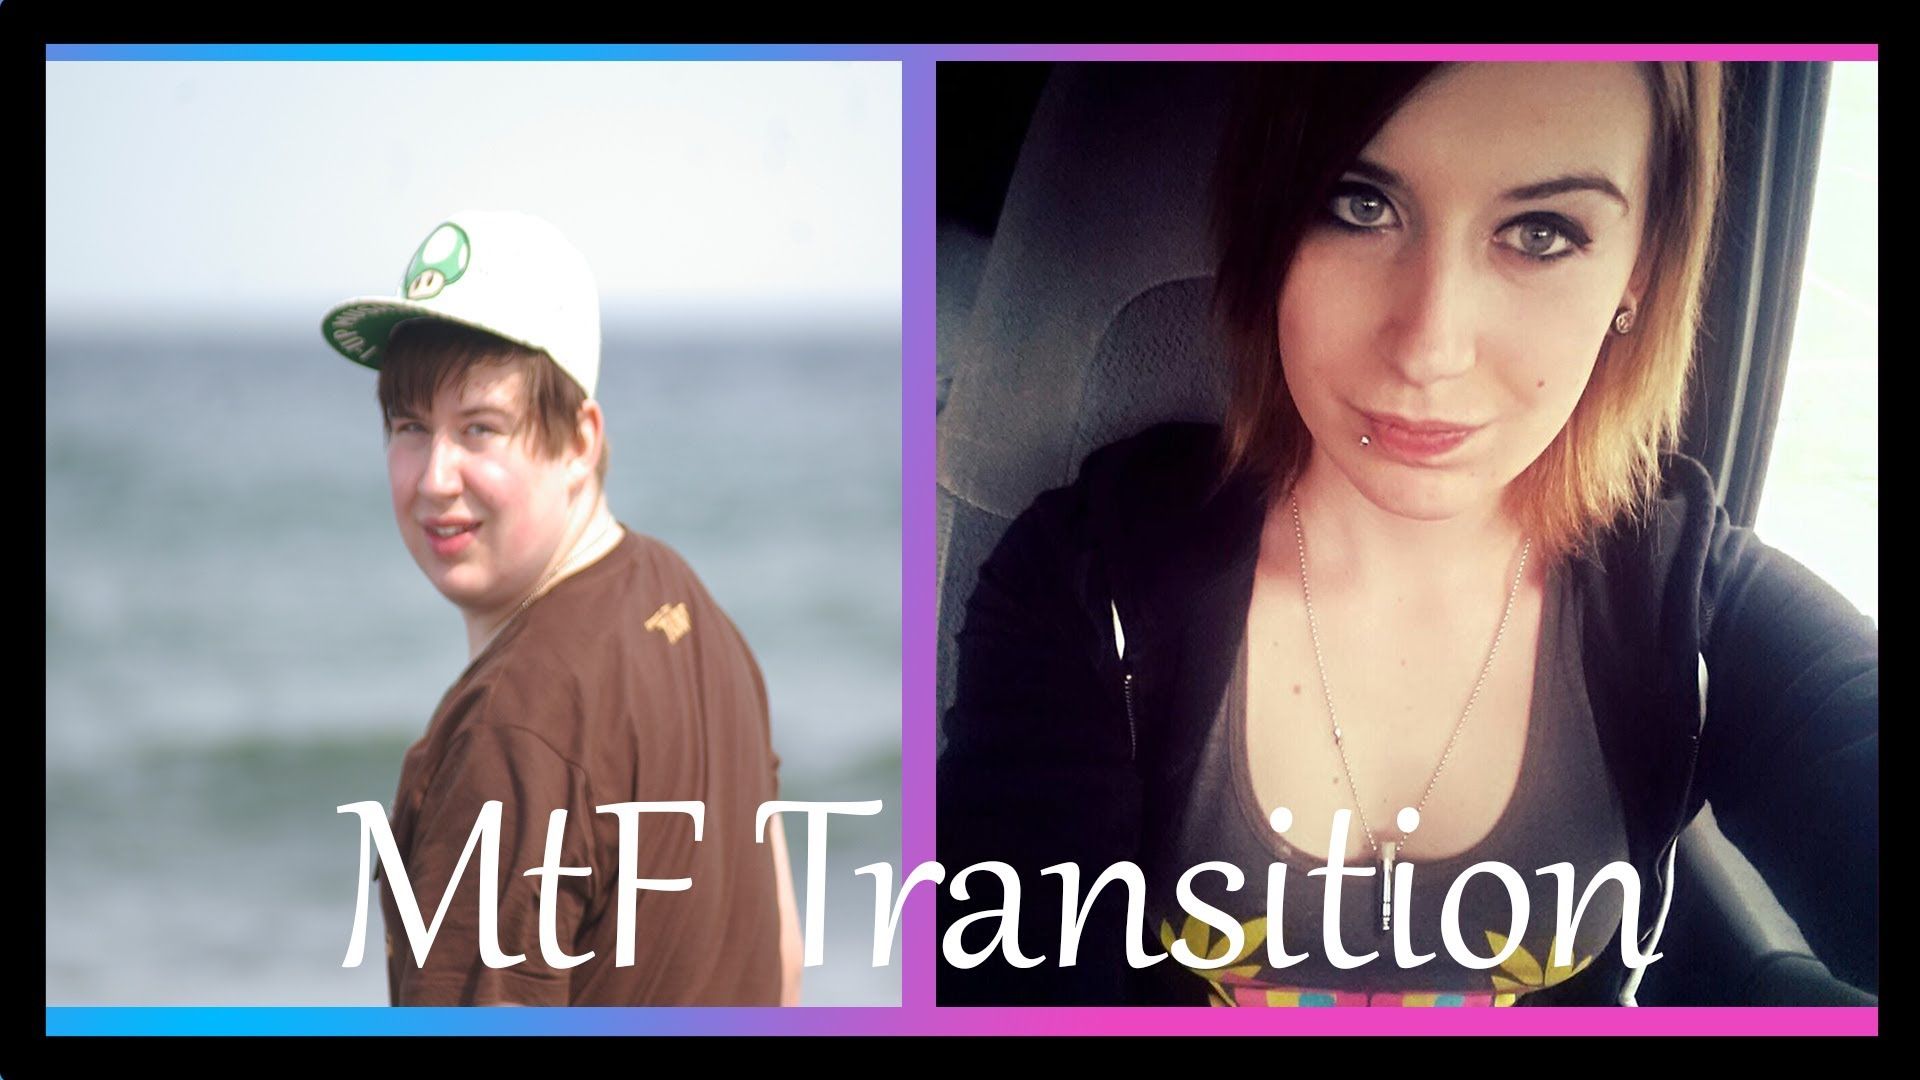 Transformation transvestite american